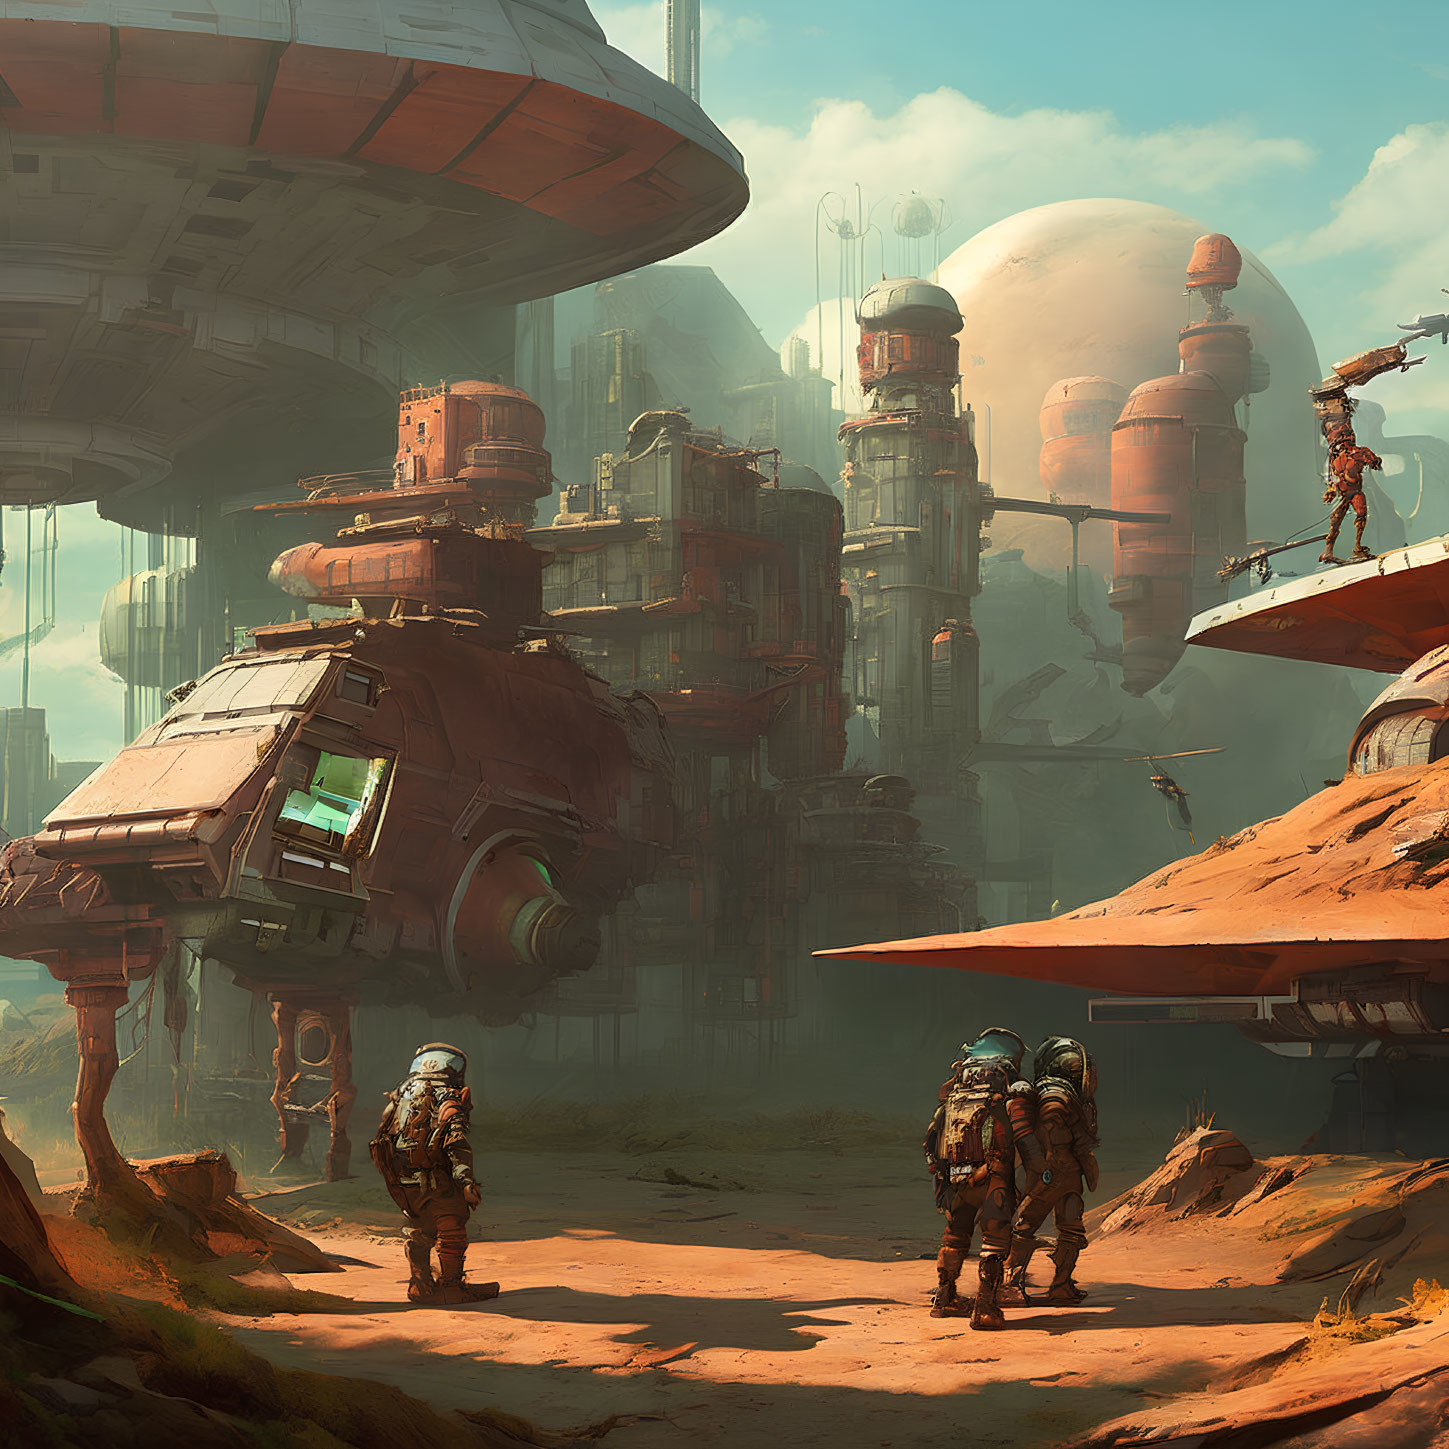 Futuristic sci-fi scene: astronauts, alien planet, giant robot, and structures